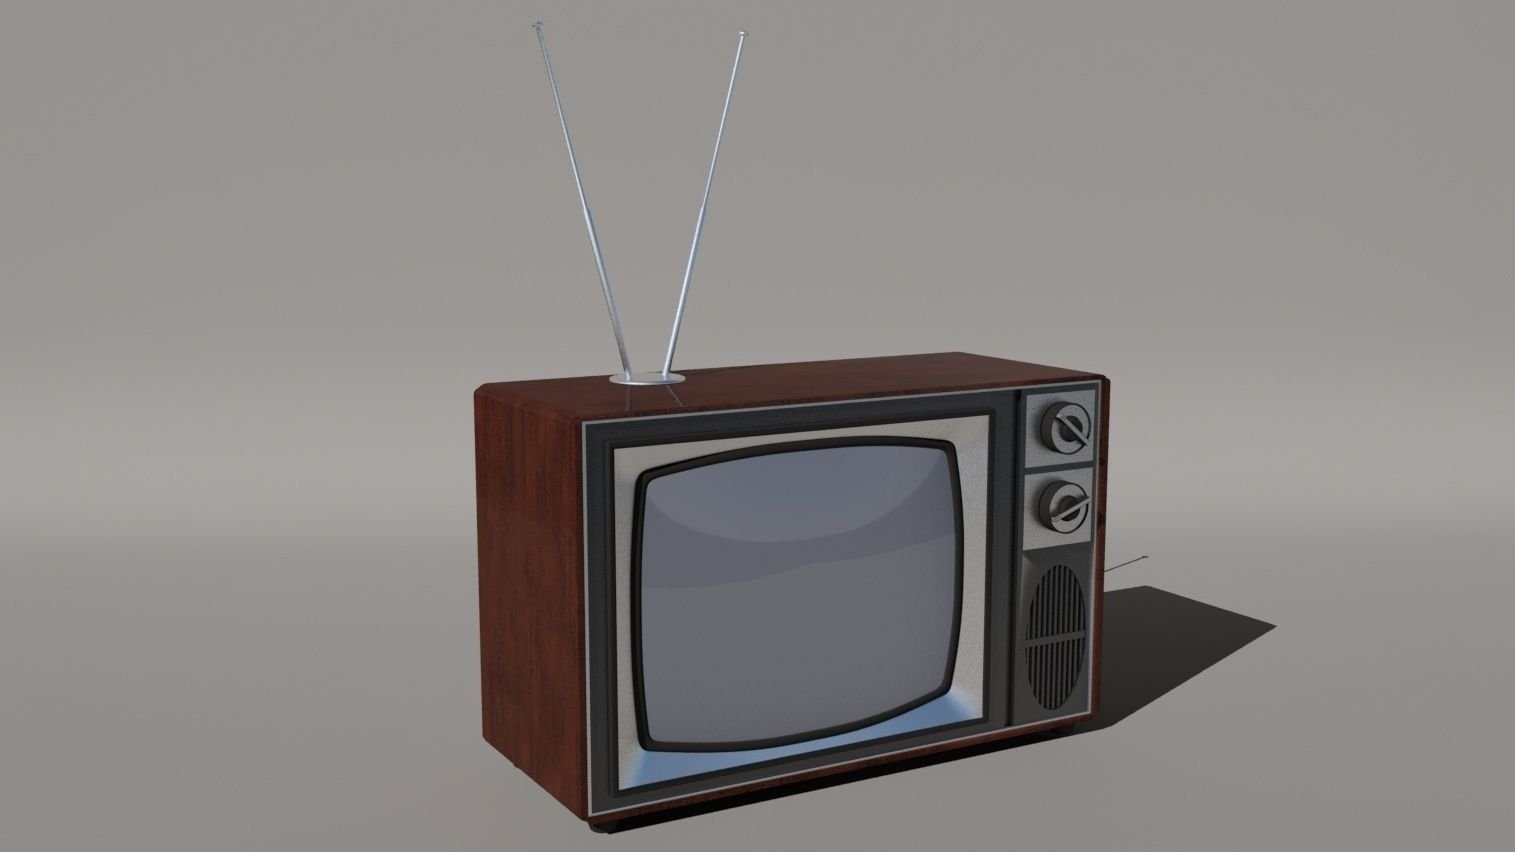 3ds Max модель телевизора. Старый телевизор. Телевизор объемный. Старинный телевизор 3д модель. Т д тв